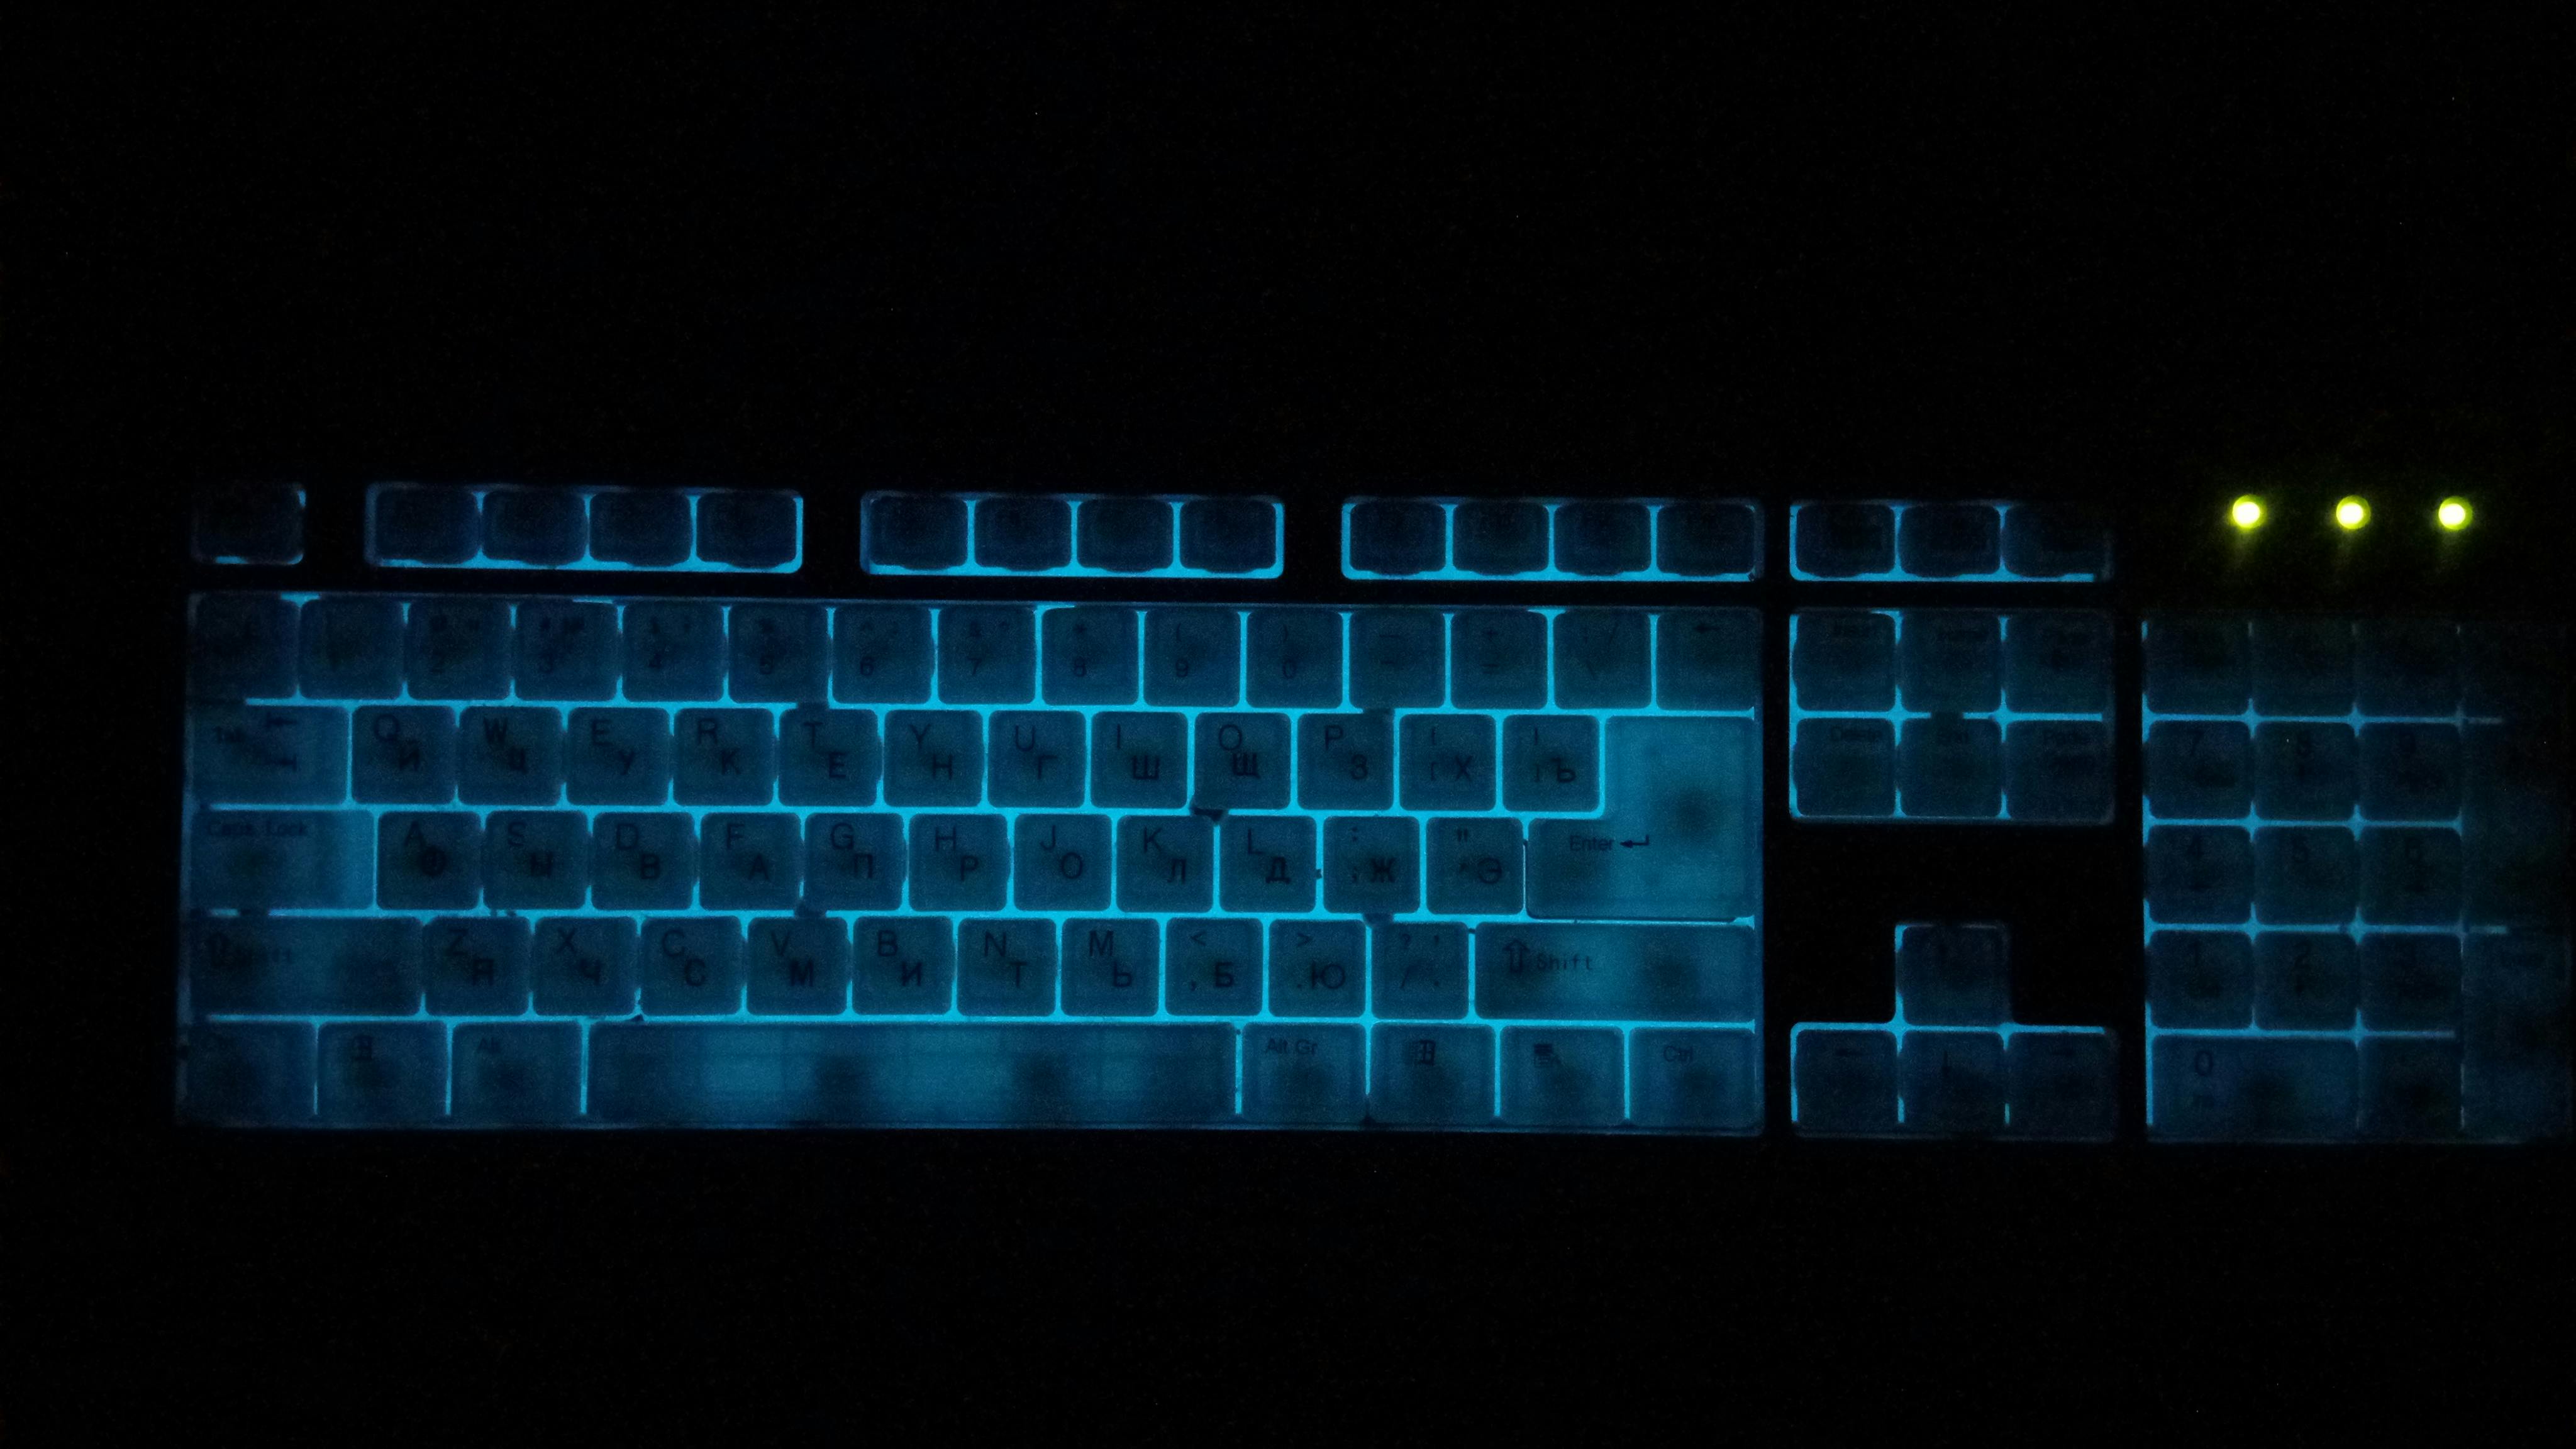 Free stock photo of blue, light, magic keyboard